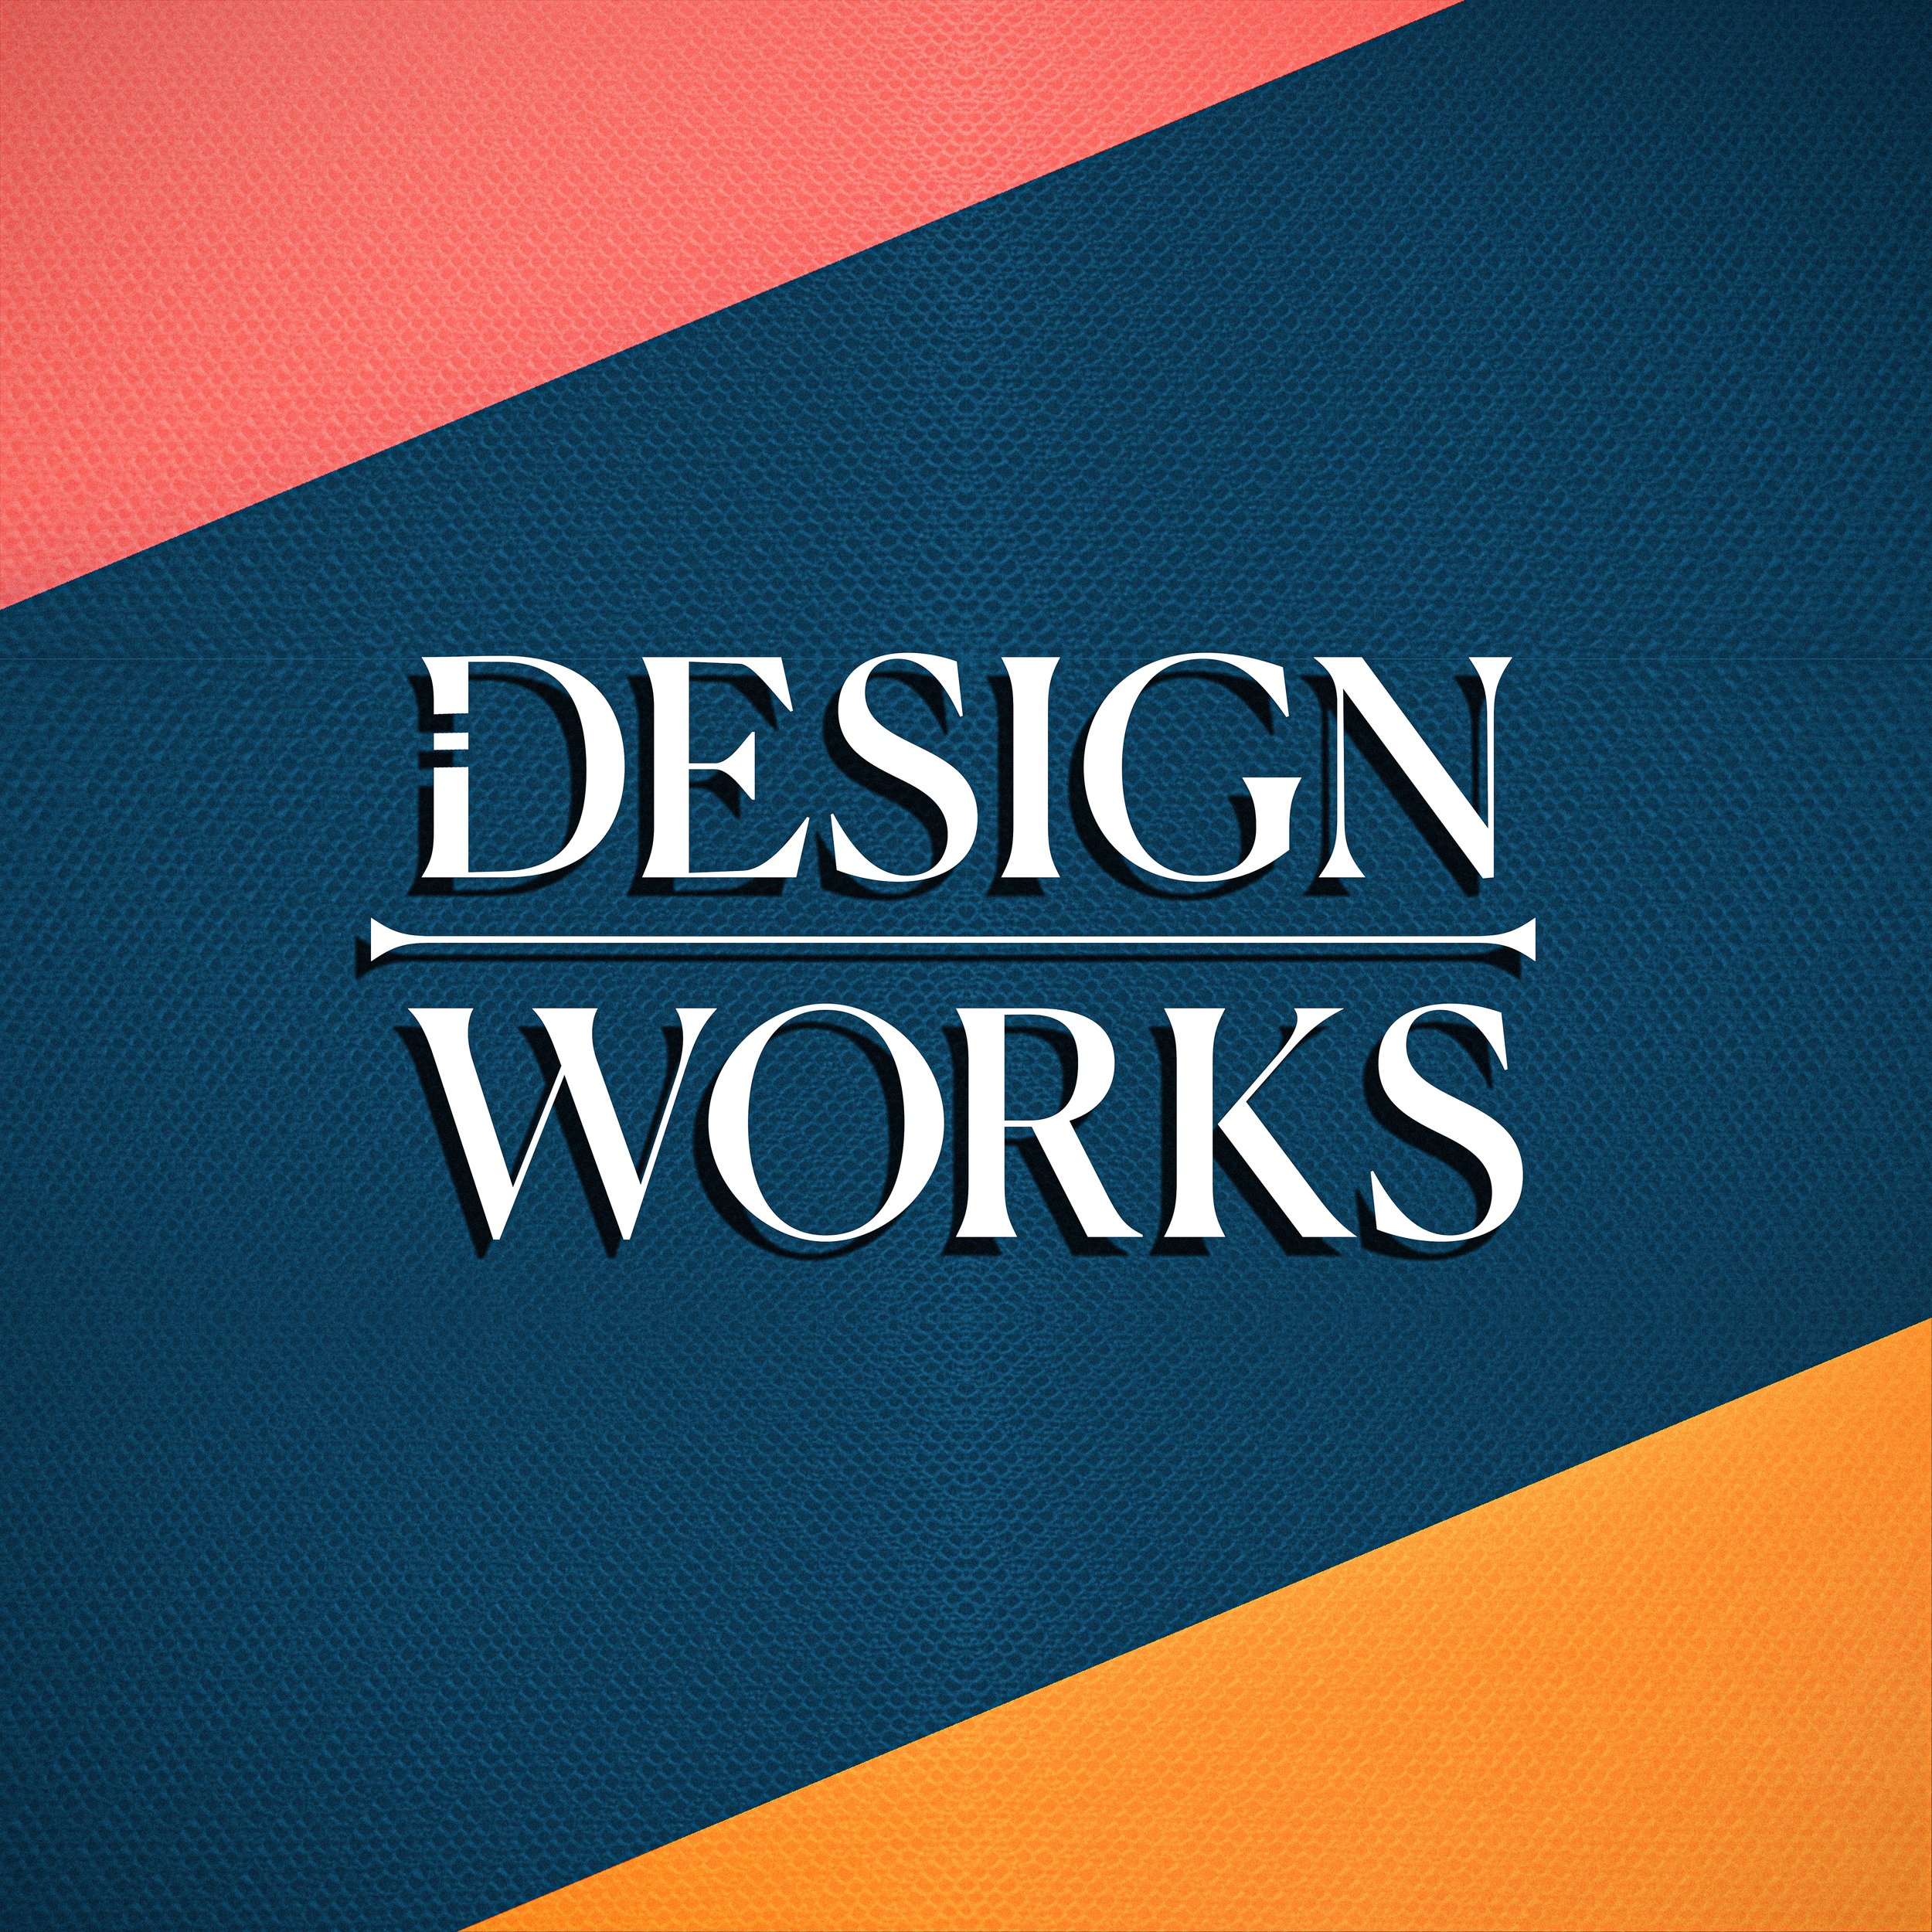 Design Works.jpg